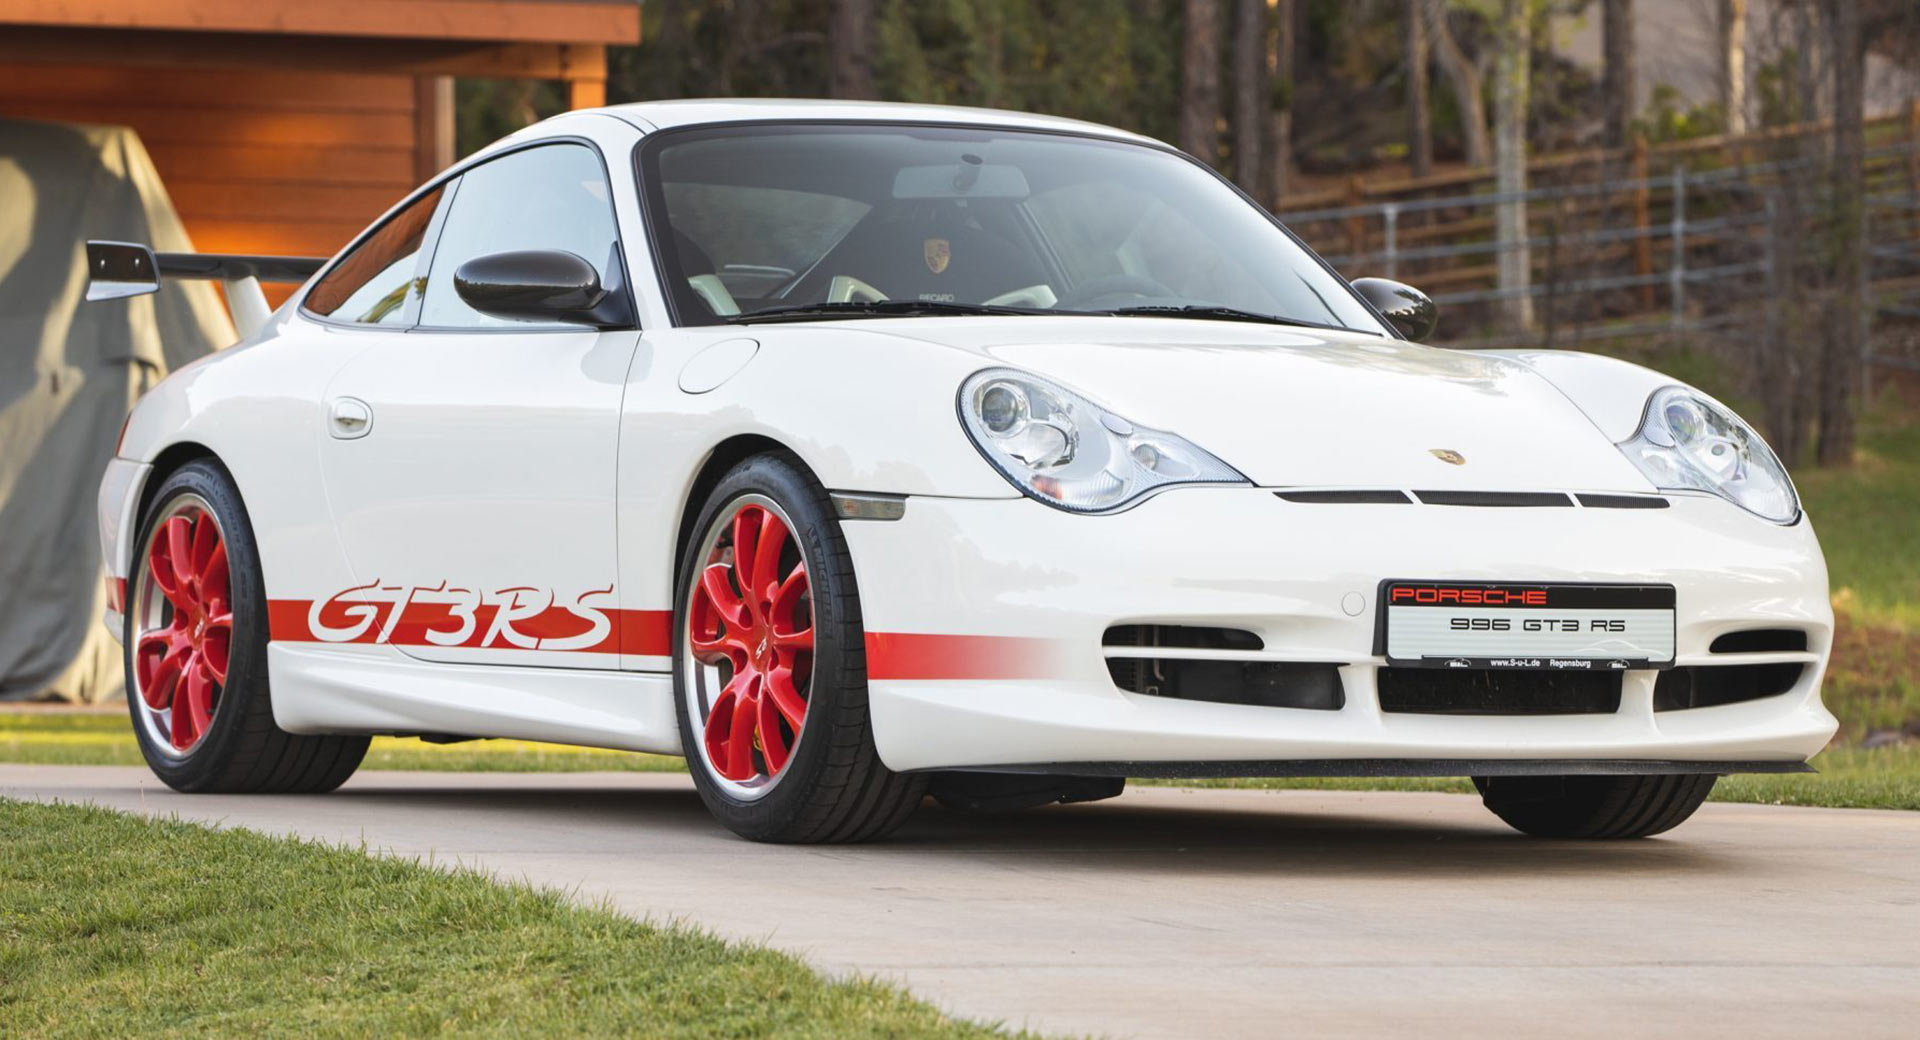 2004 Porsche 911 GT3 RS Is A Very Rare Sight On U.S. Roads